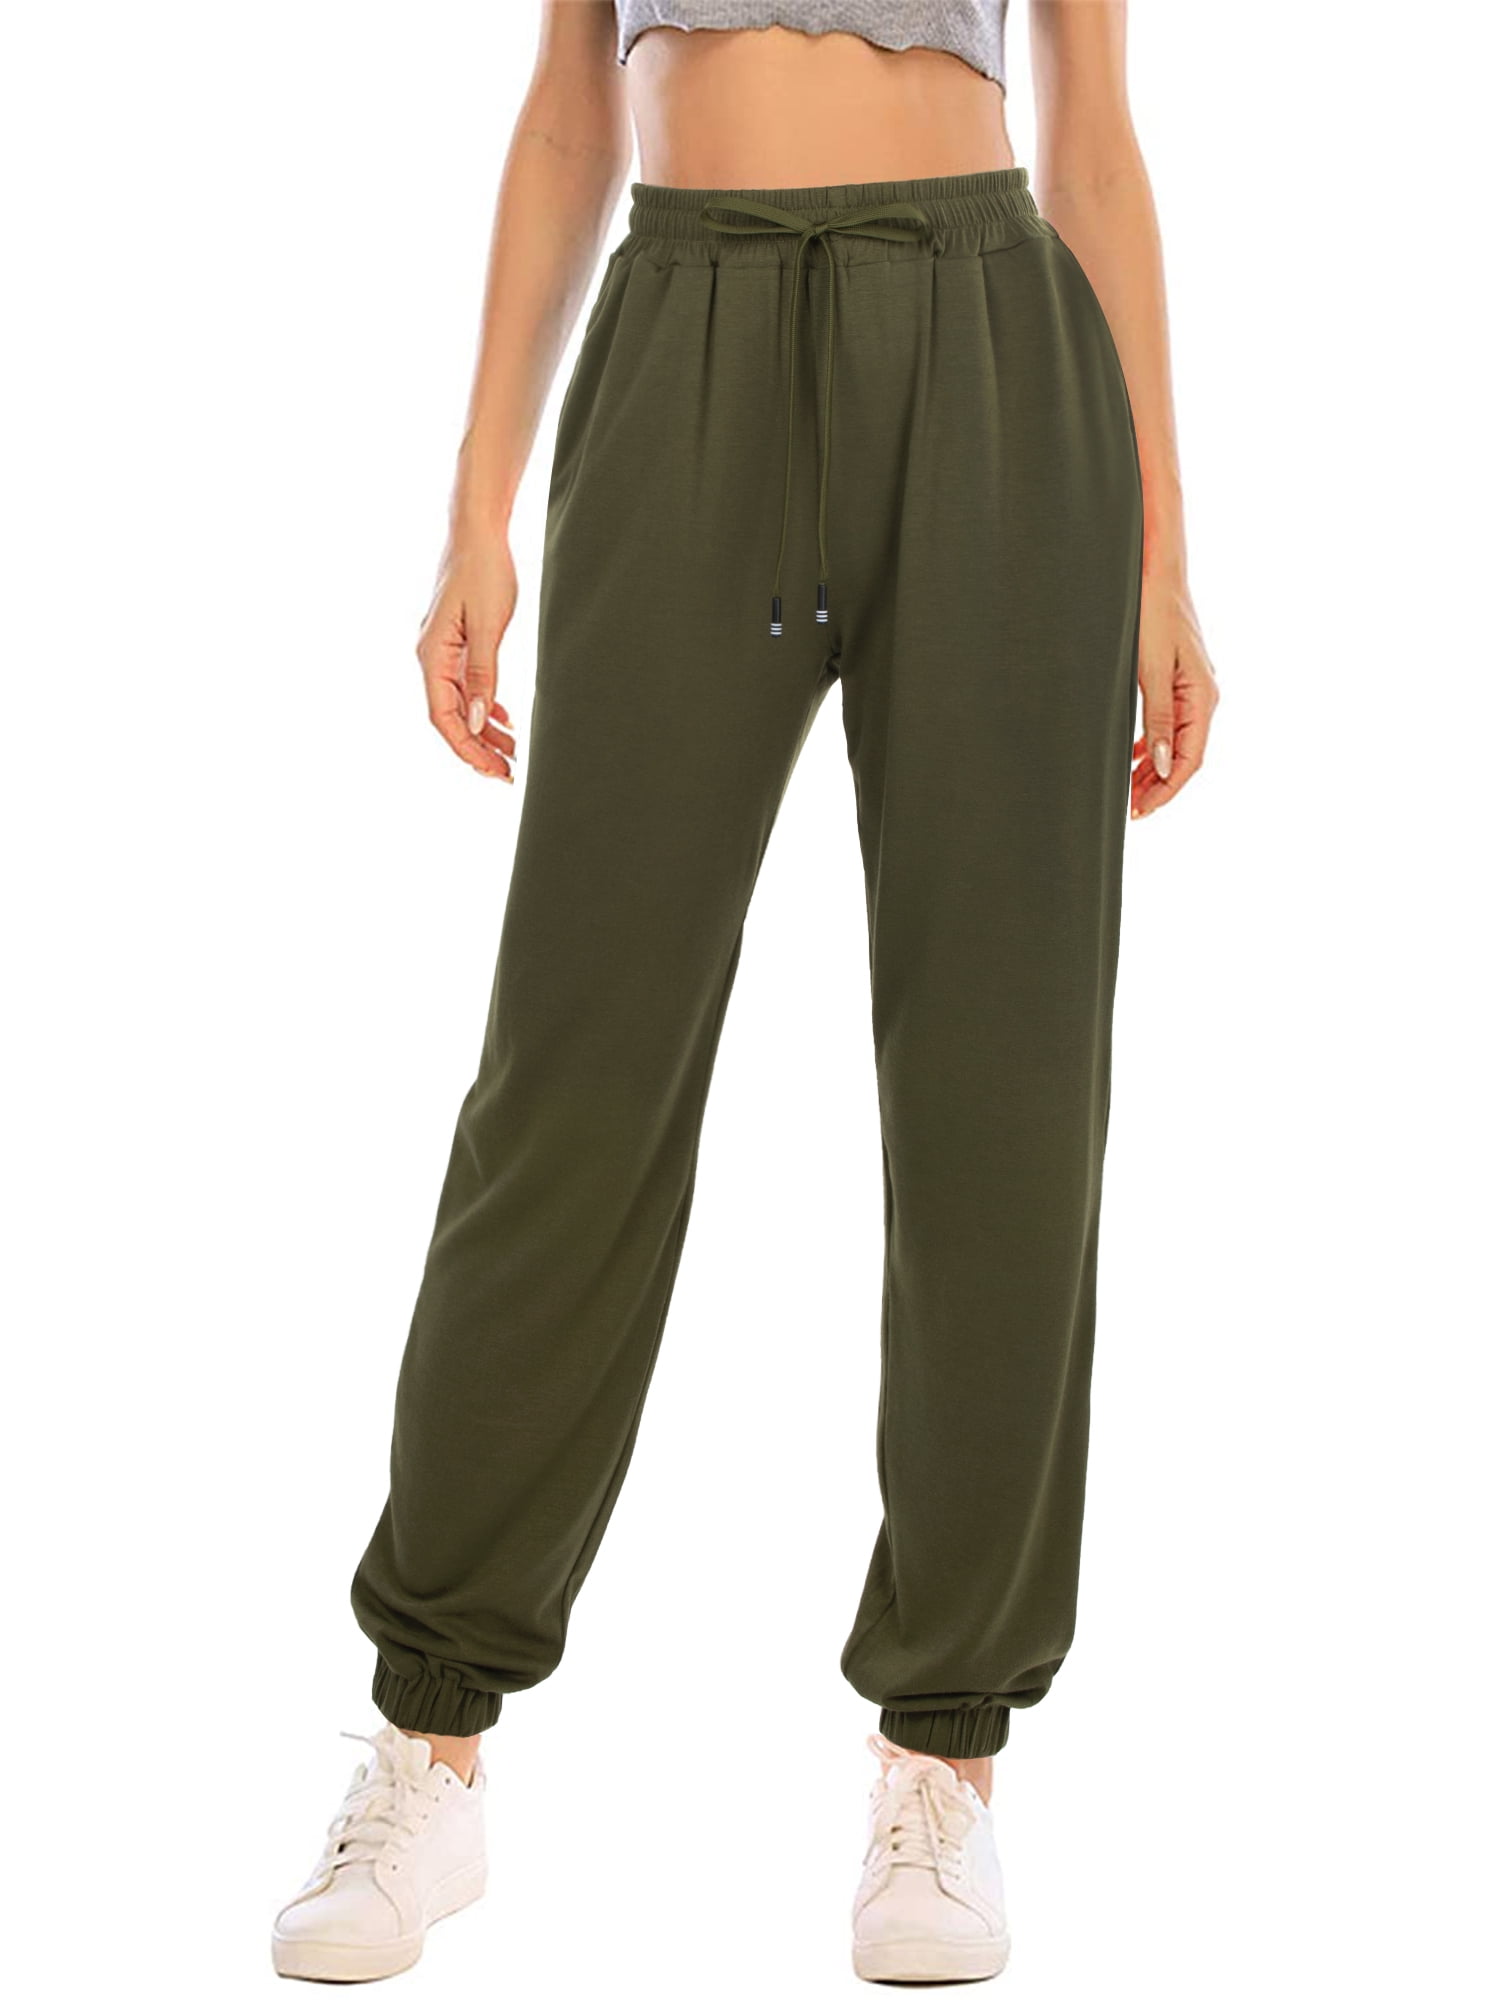 TARSE Women's Stretch Yoga Pants Soft Drawstring Workout Sweatpants Causal Lounge Pants Pockets Trousers 